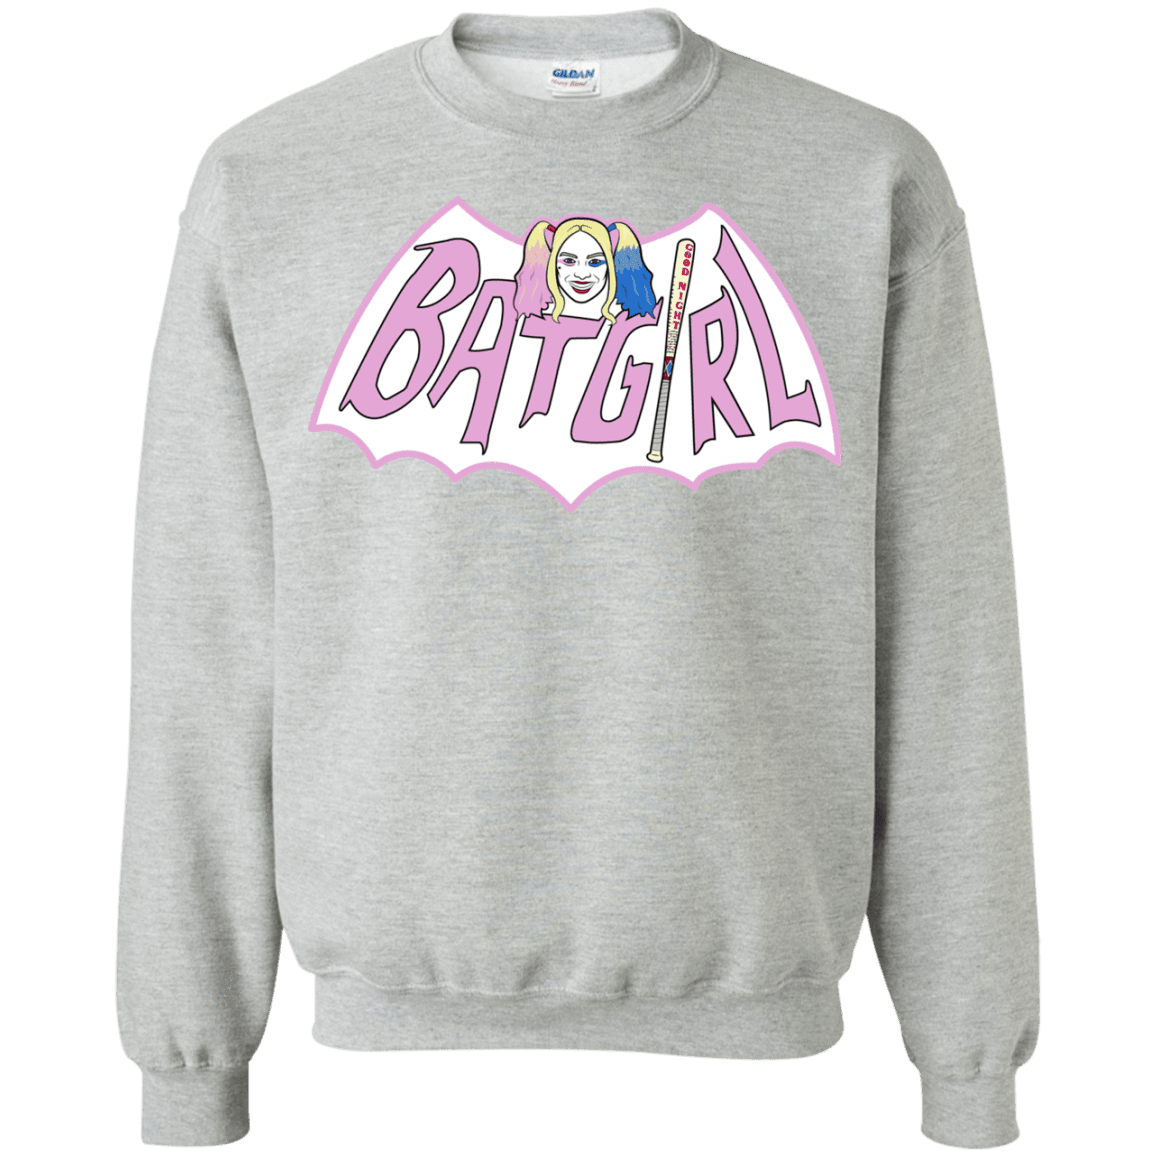 Sweatshirts Sport Grey / Small Batgirl Crewneck Sweatshirt